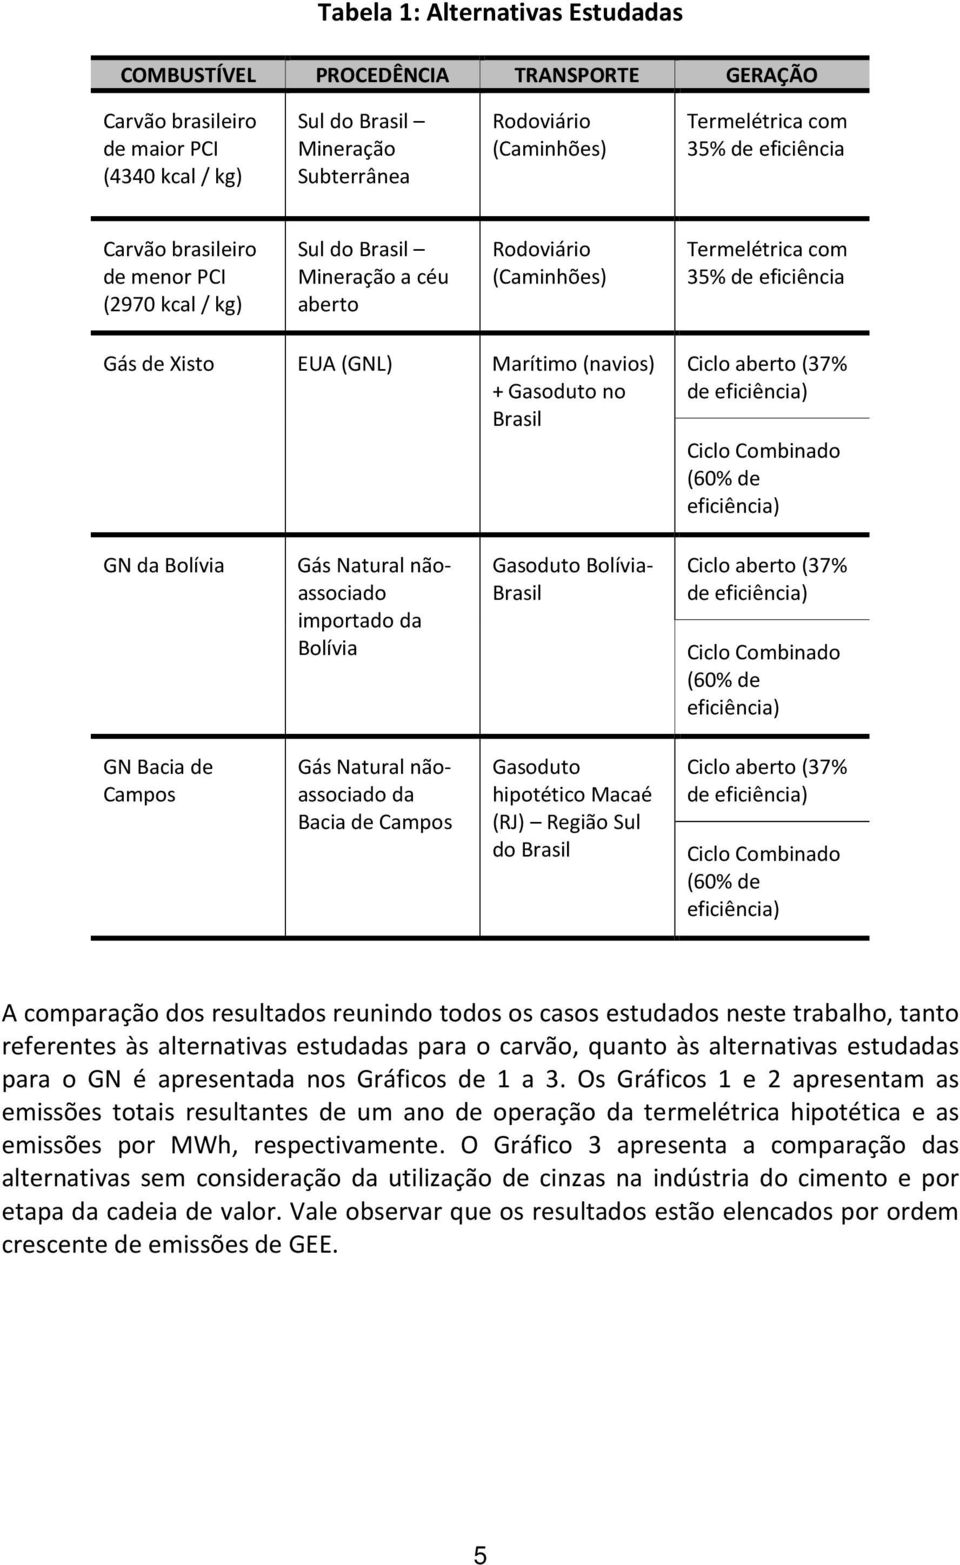 (navios) + Gasoduto no Brasil Ciclo aberto (37% de eficiência) Ciclo Combinado (60% de eficiência) GN da Bolívia Gás Natural nãoassociado importado da Bolívia Gasoduto Bolívia- Brasil Ciclo aberto